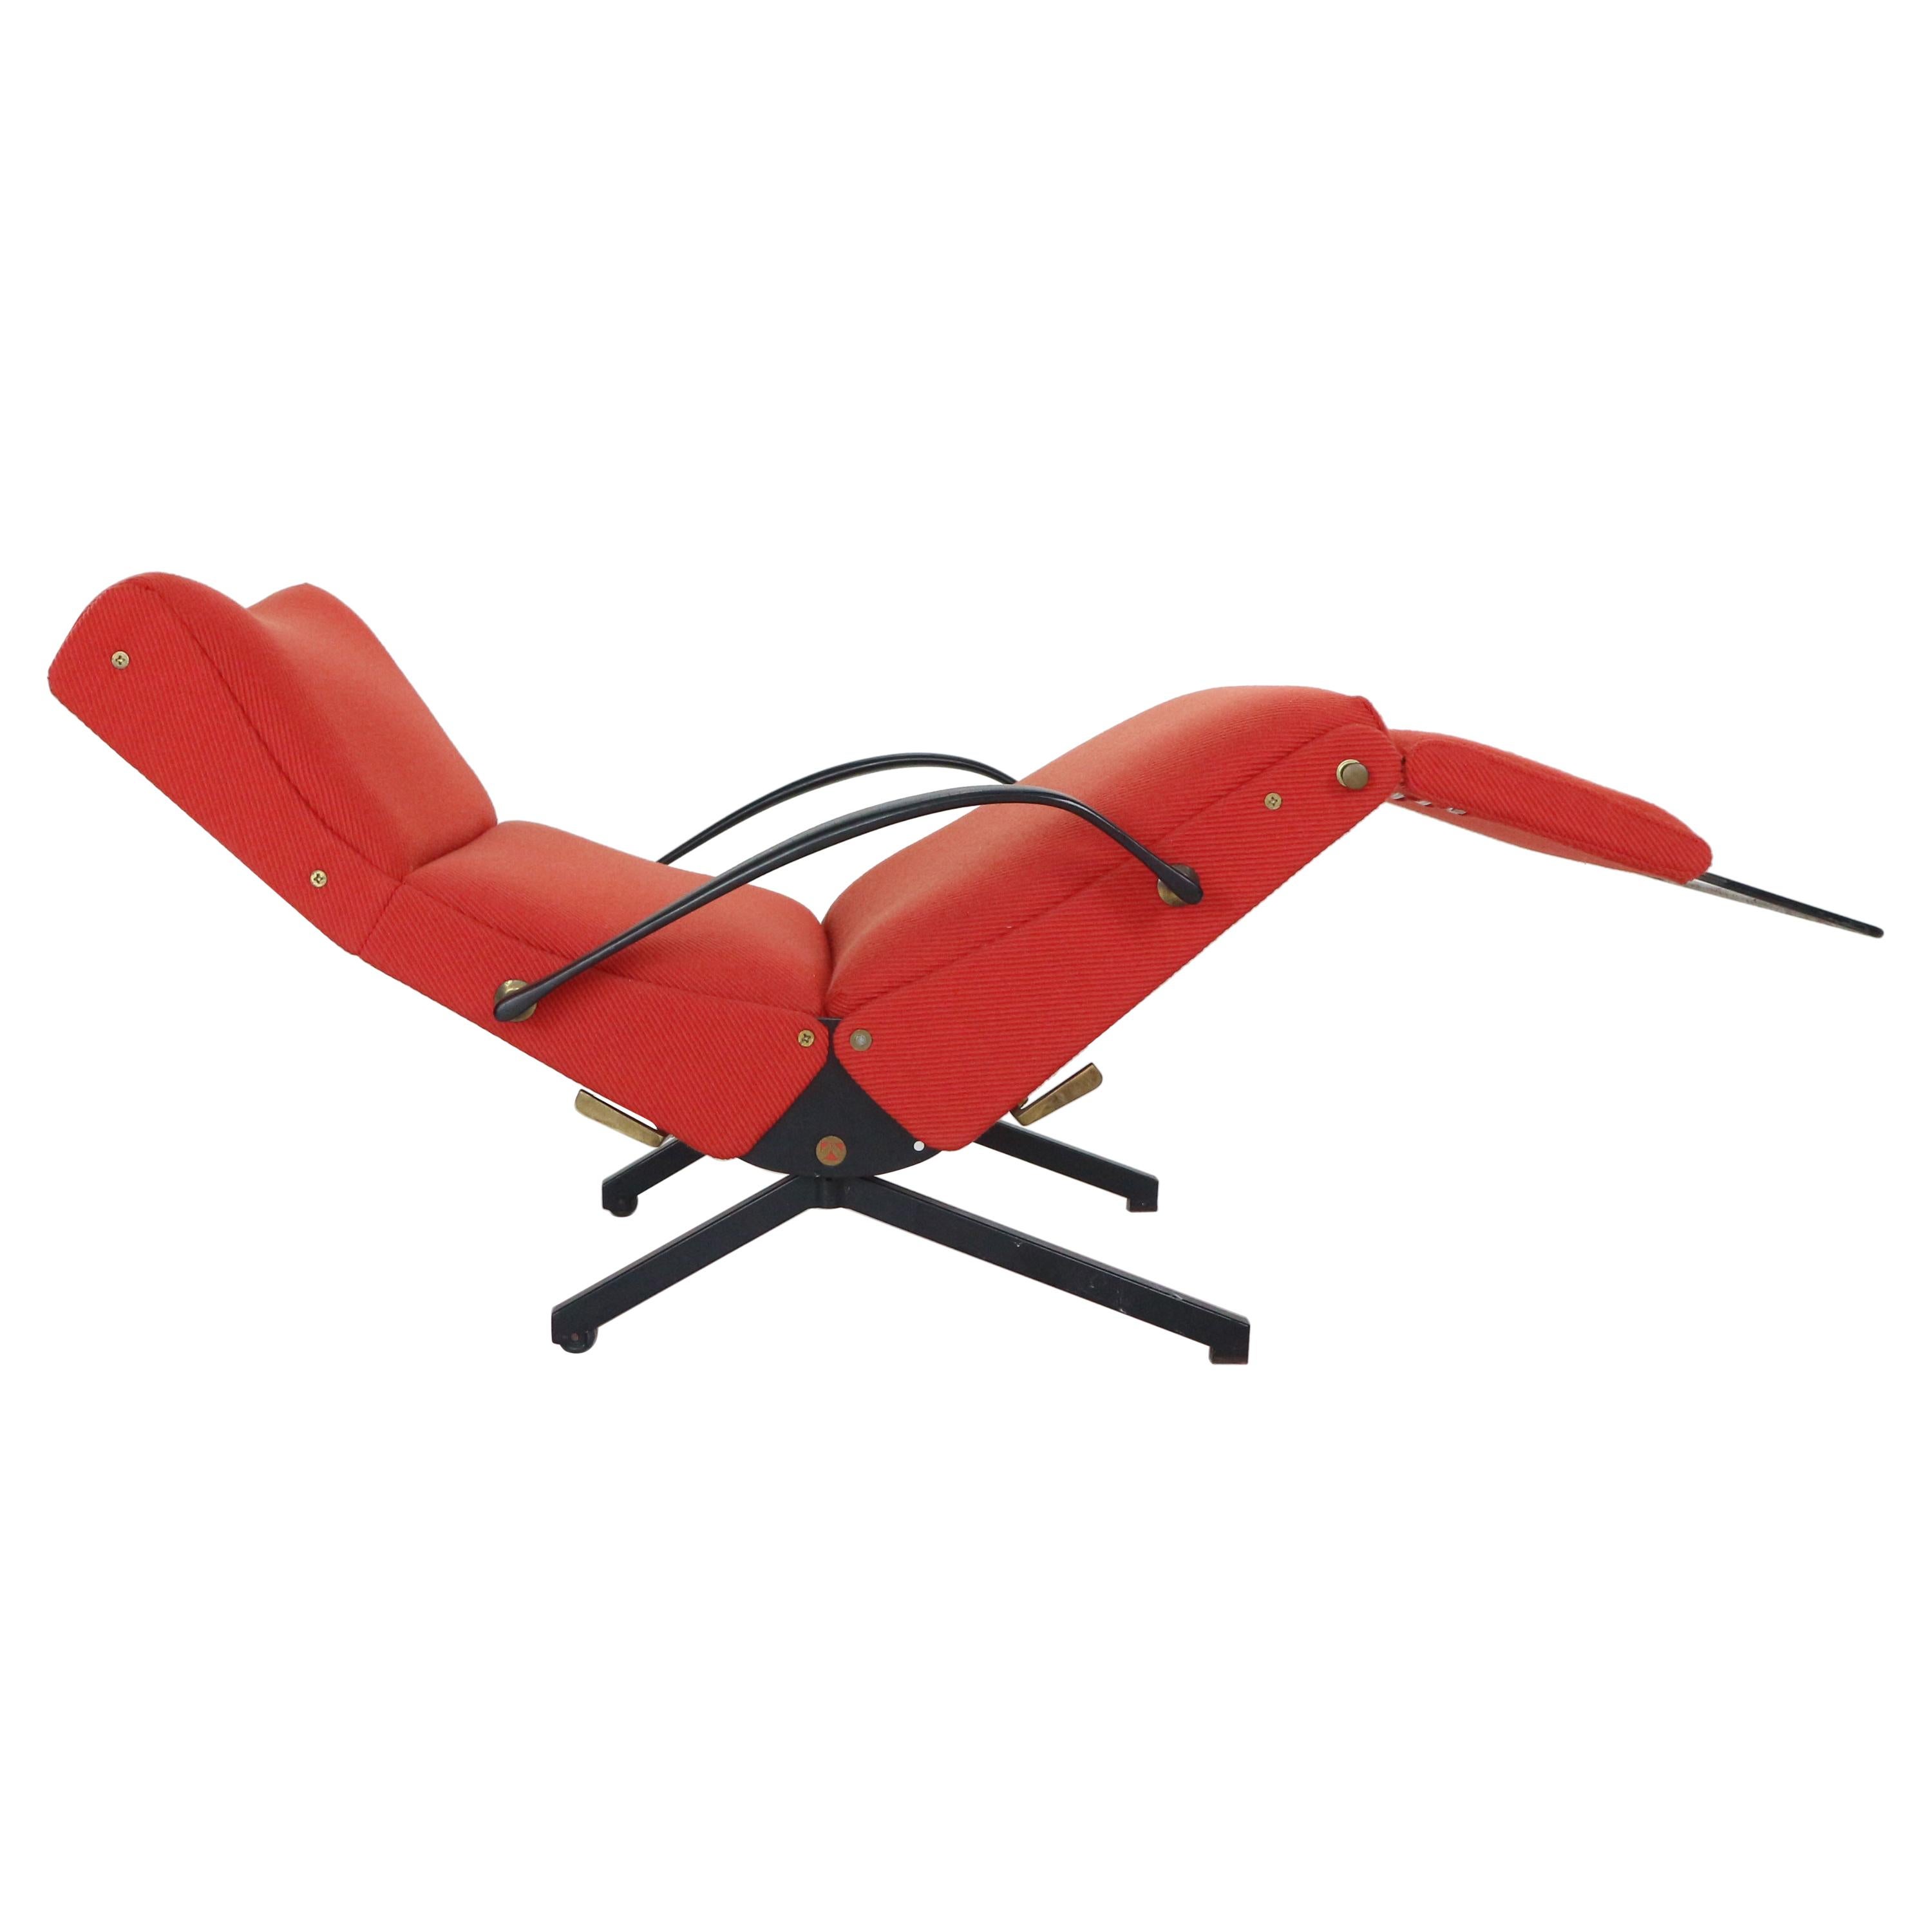 Osvaldo Borsani Red "P40" Lounge Chair for Tecno, 1950 Italy